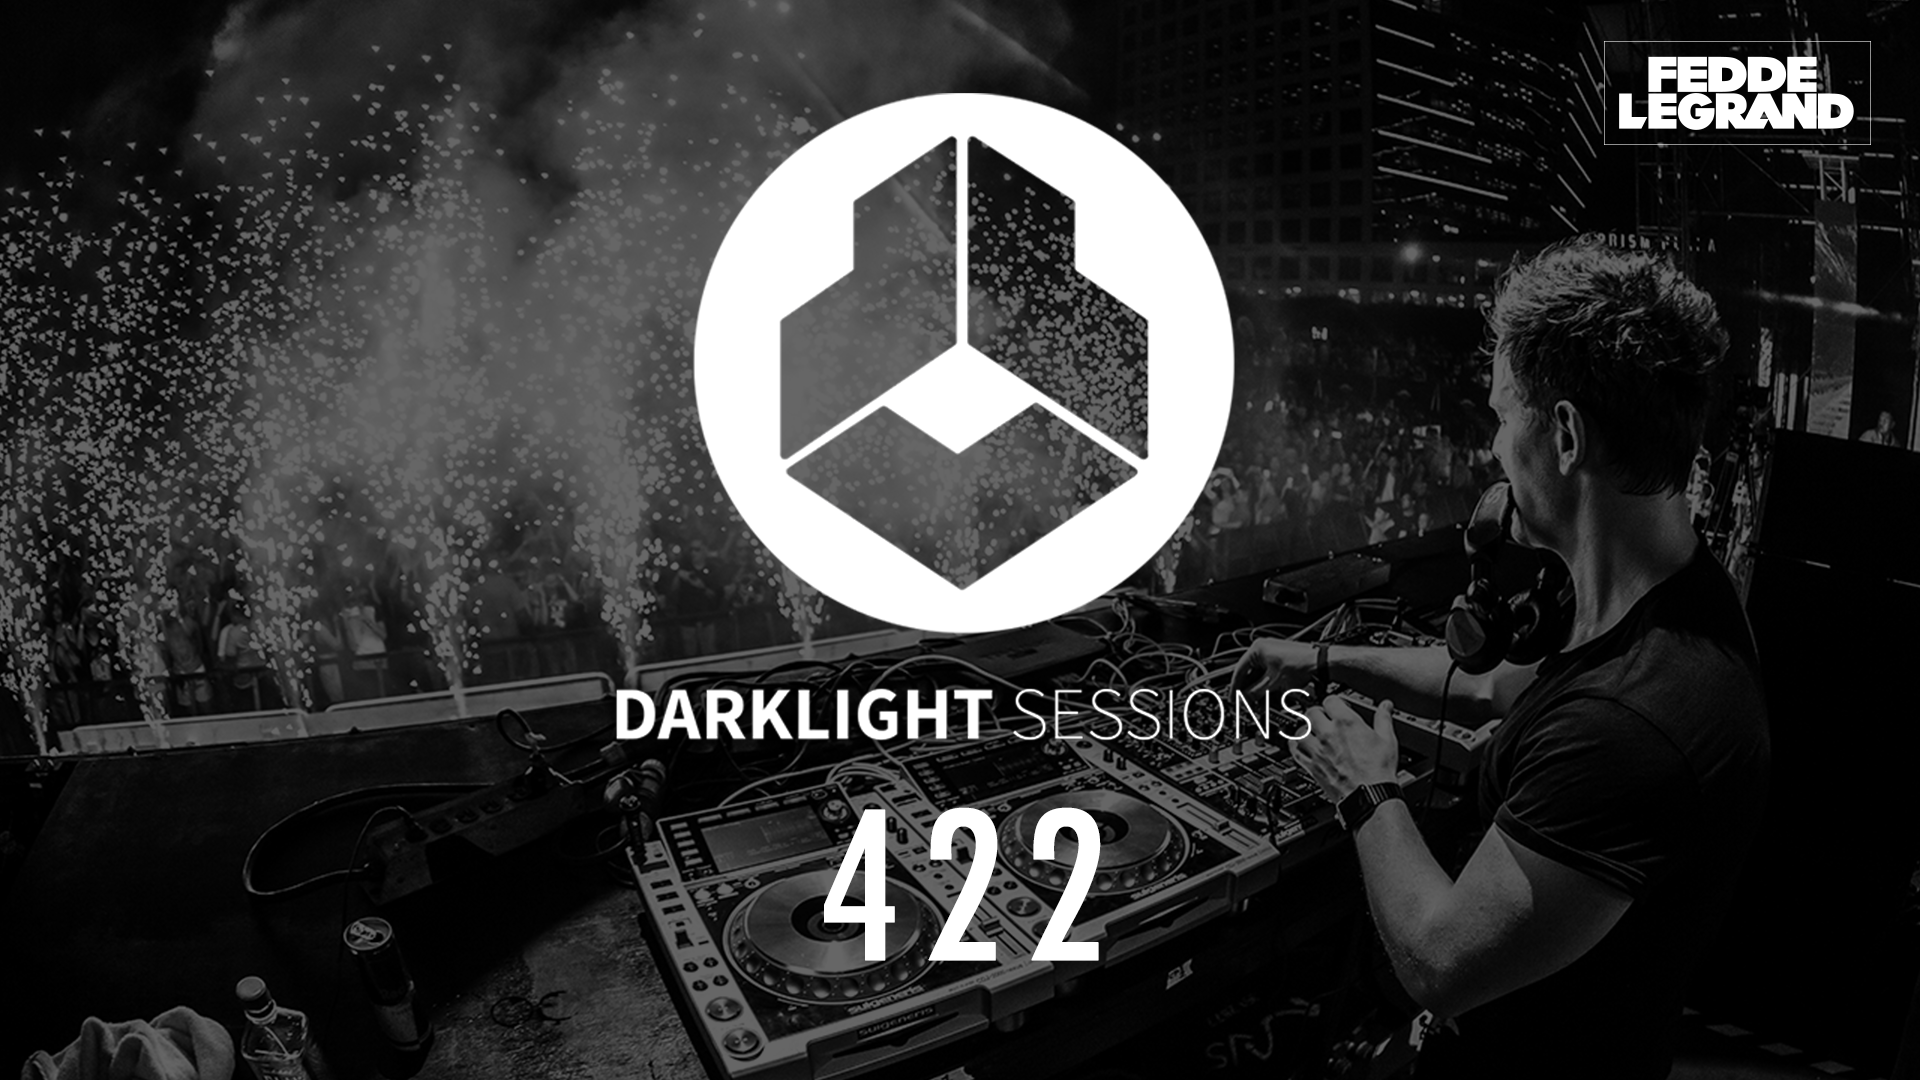 Darklight Sessions 422